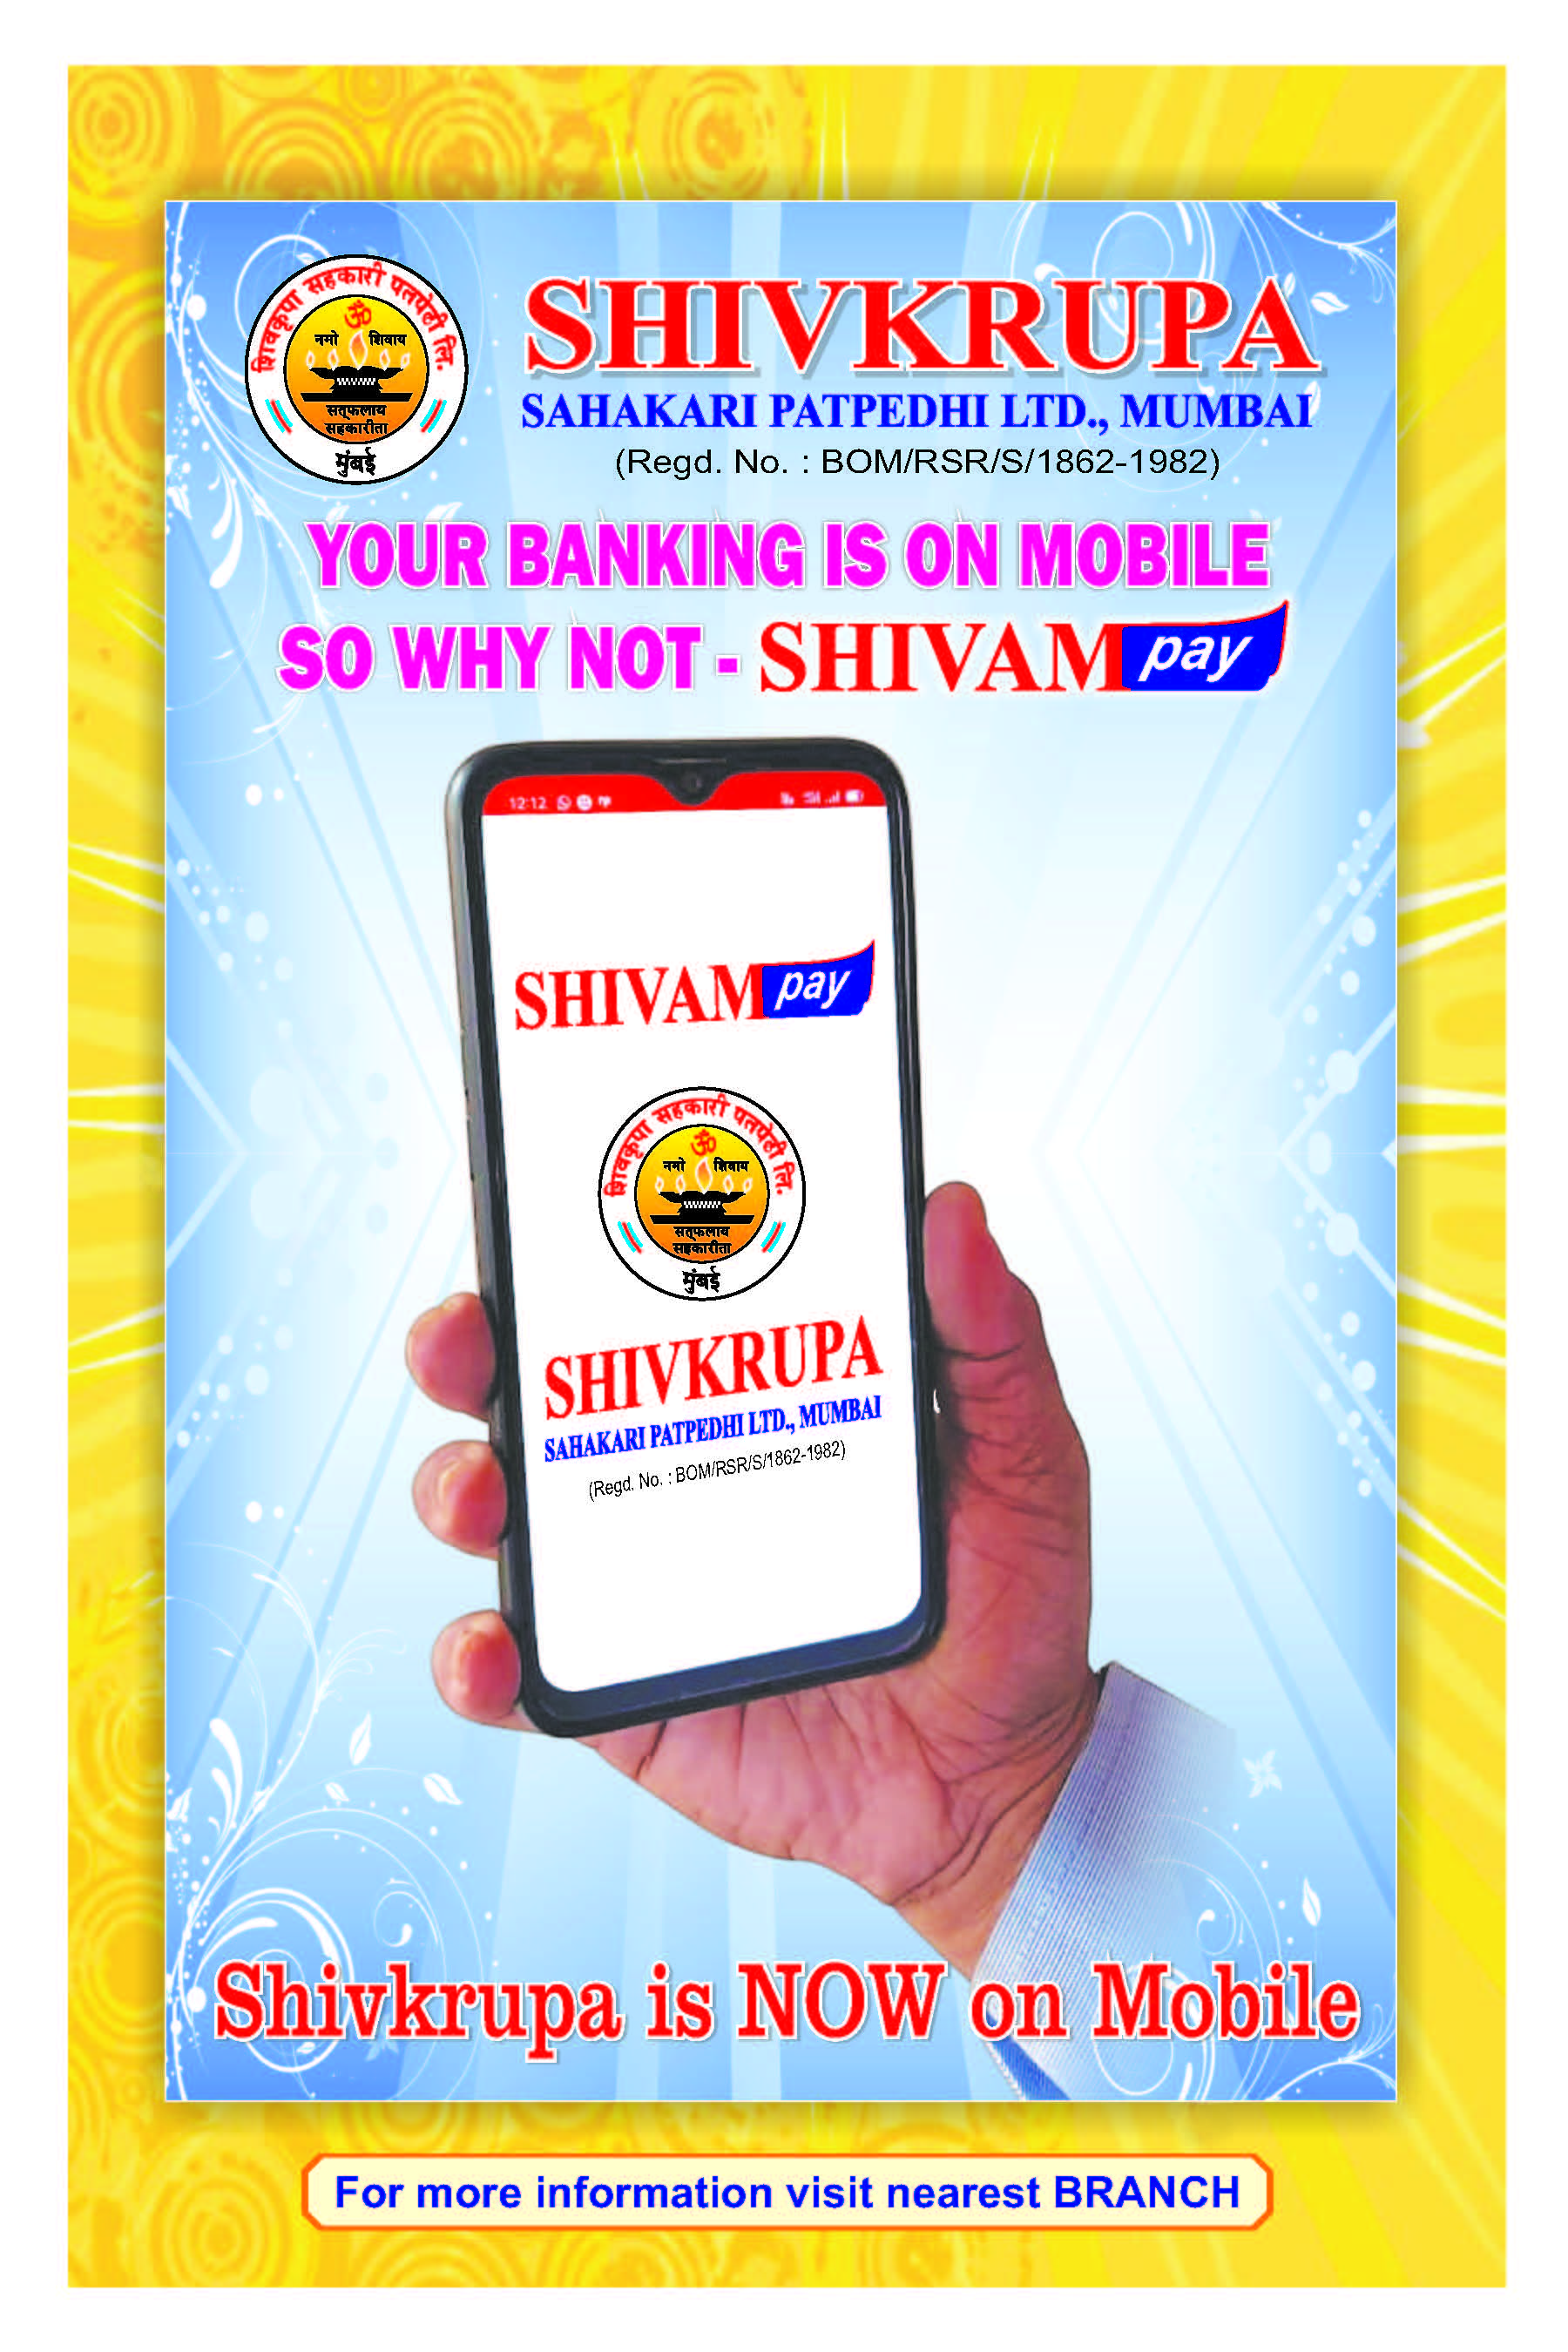 SHIVAMPAY - MOBILE BANKING SERVICE